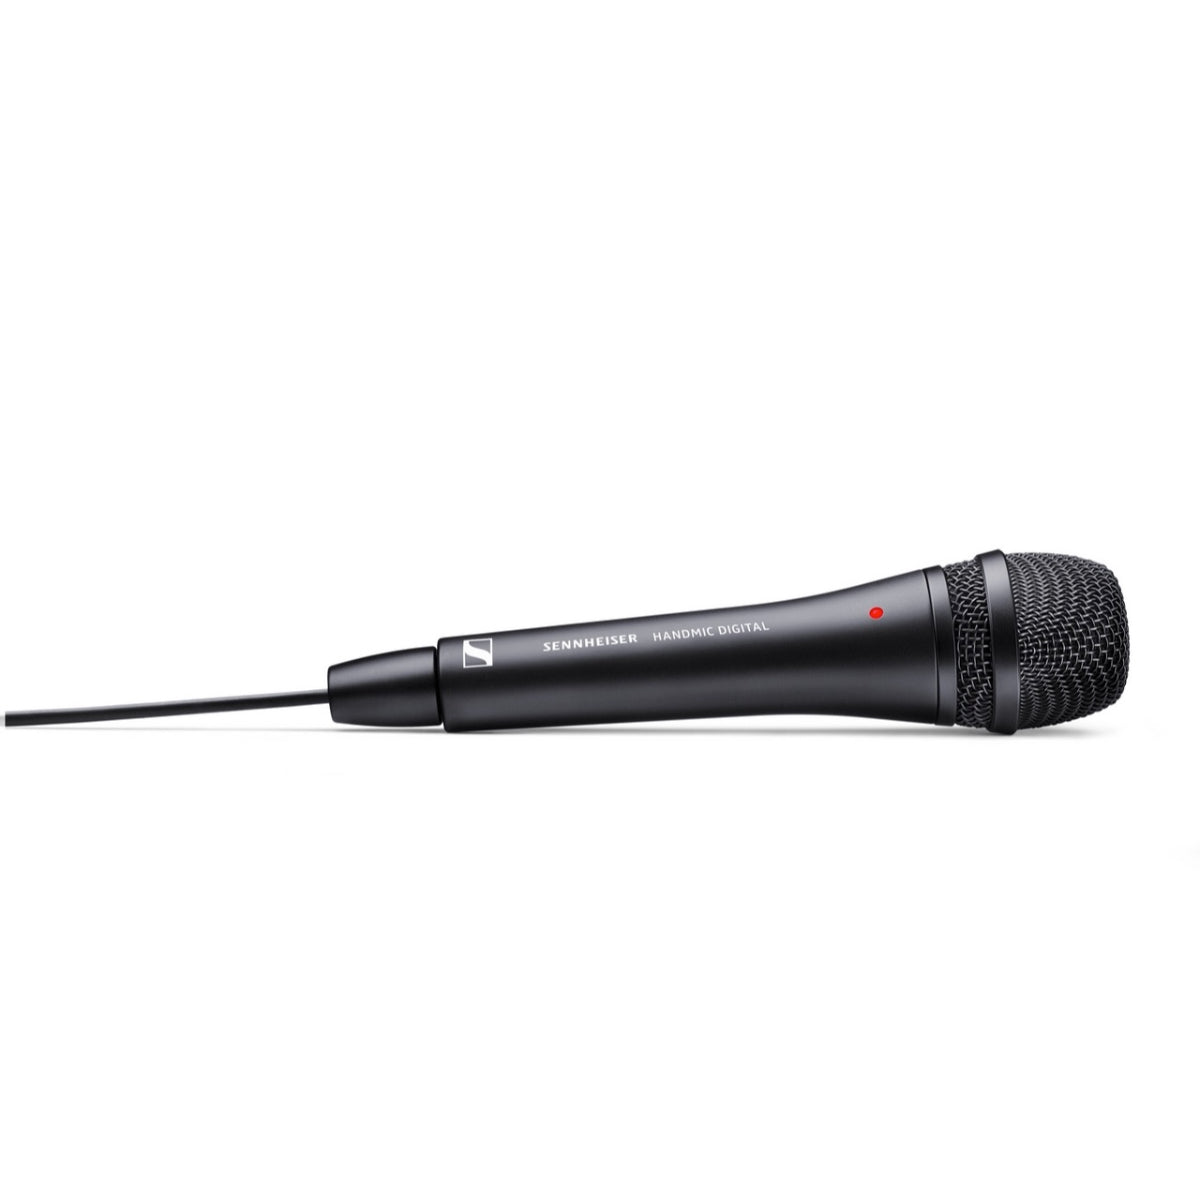 Sennheiser HandMic Digital Dynamic Cardioid Handheld Microphone, With Digital Interface, 2m Cable